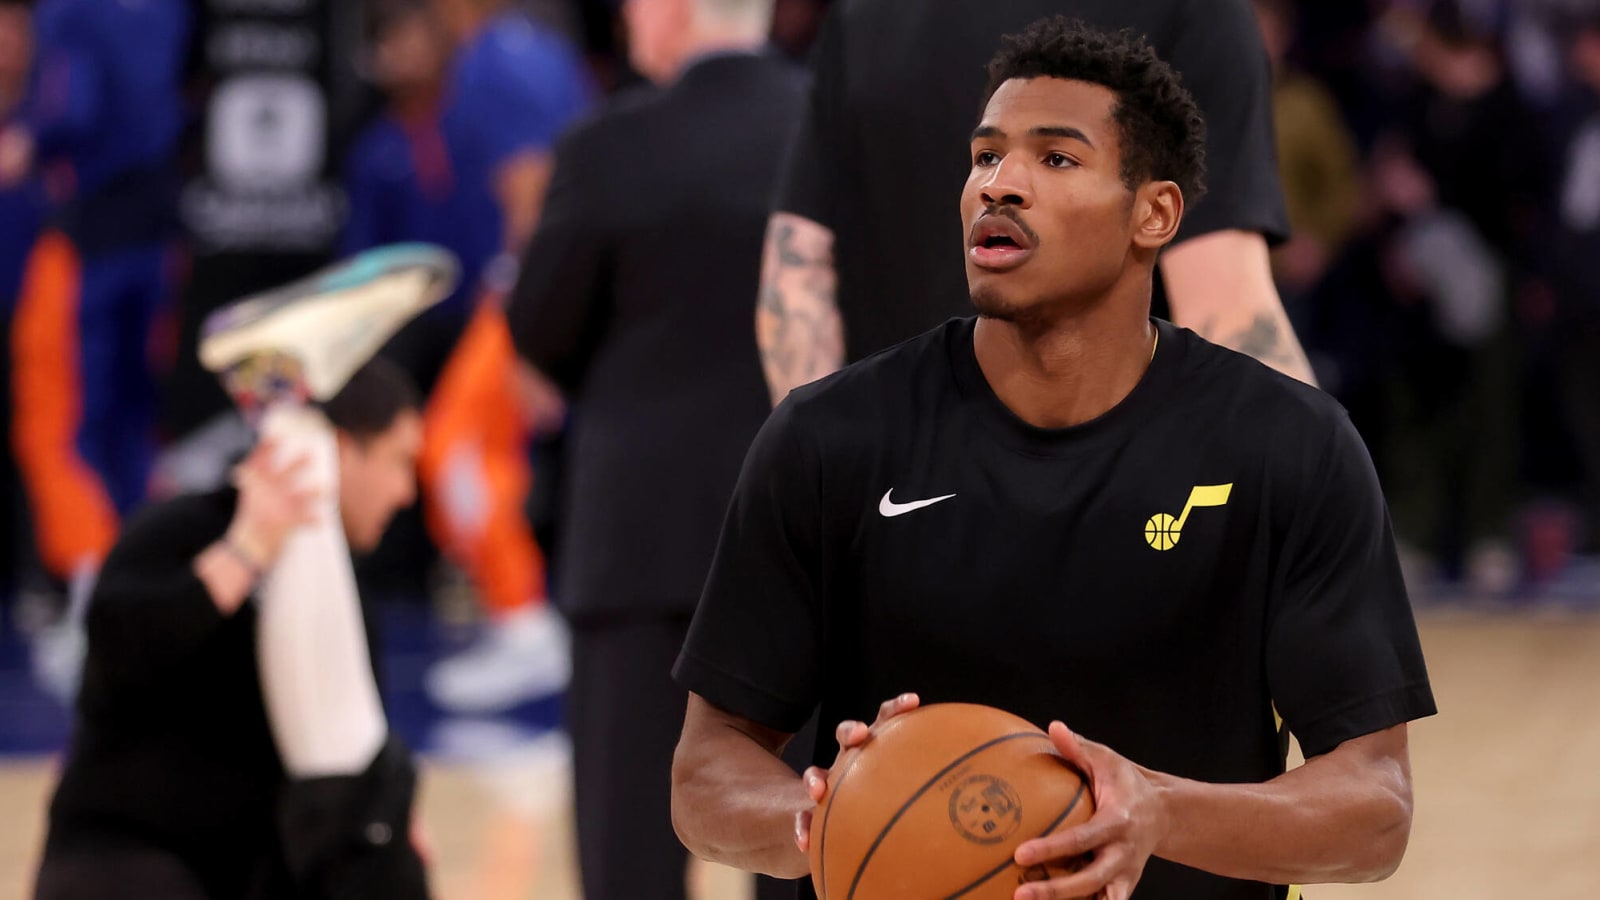 Jazz-Raptors trade brings former Kansas stars together as teammates